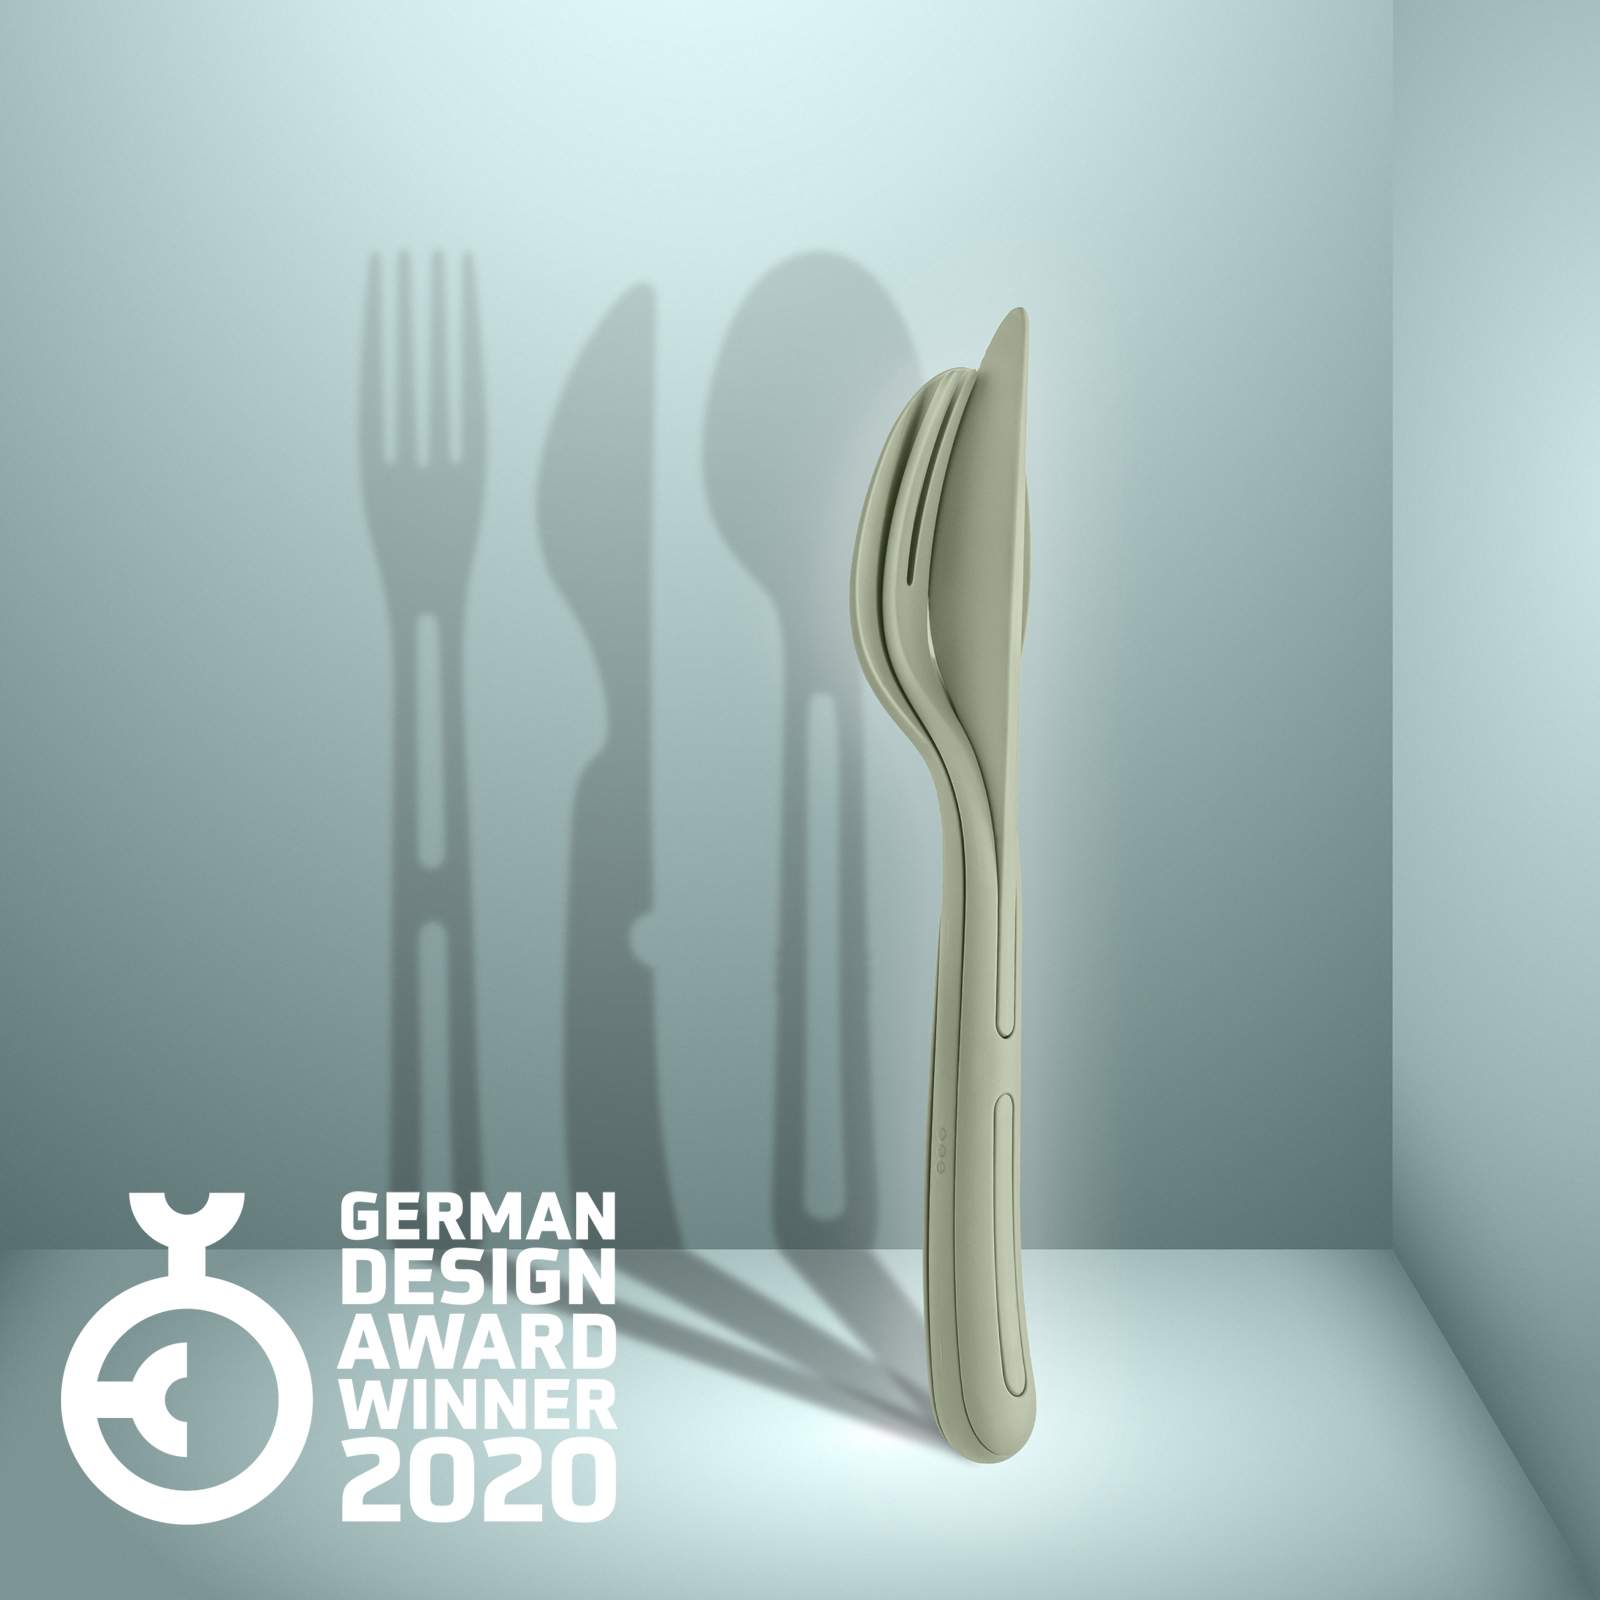 German Design Award 2020